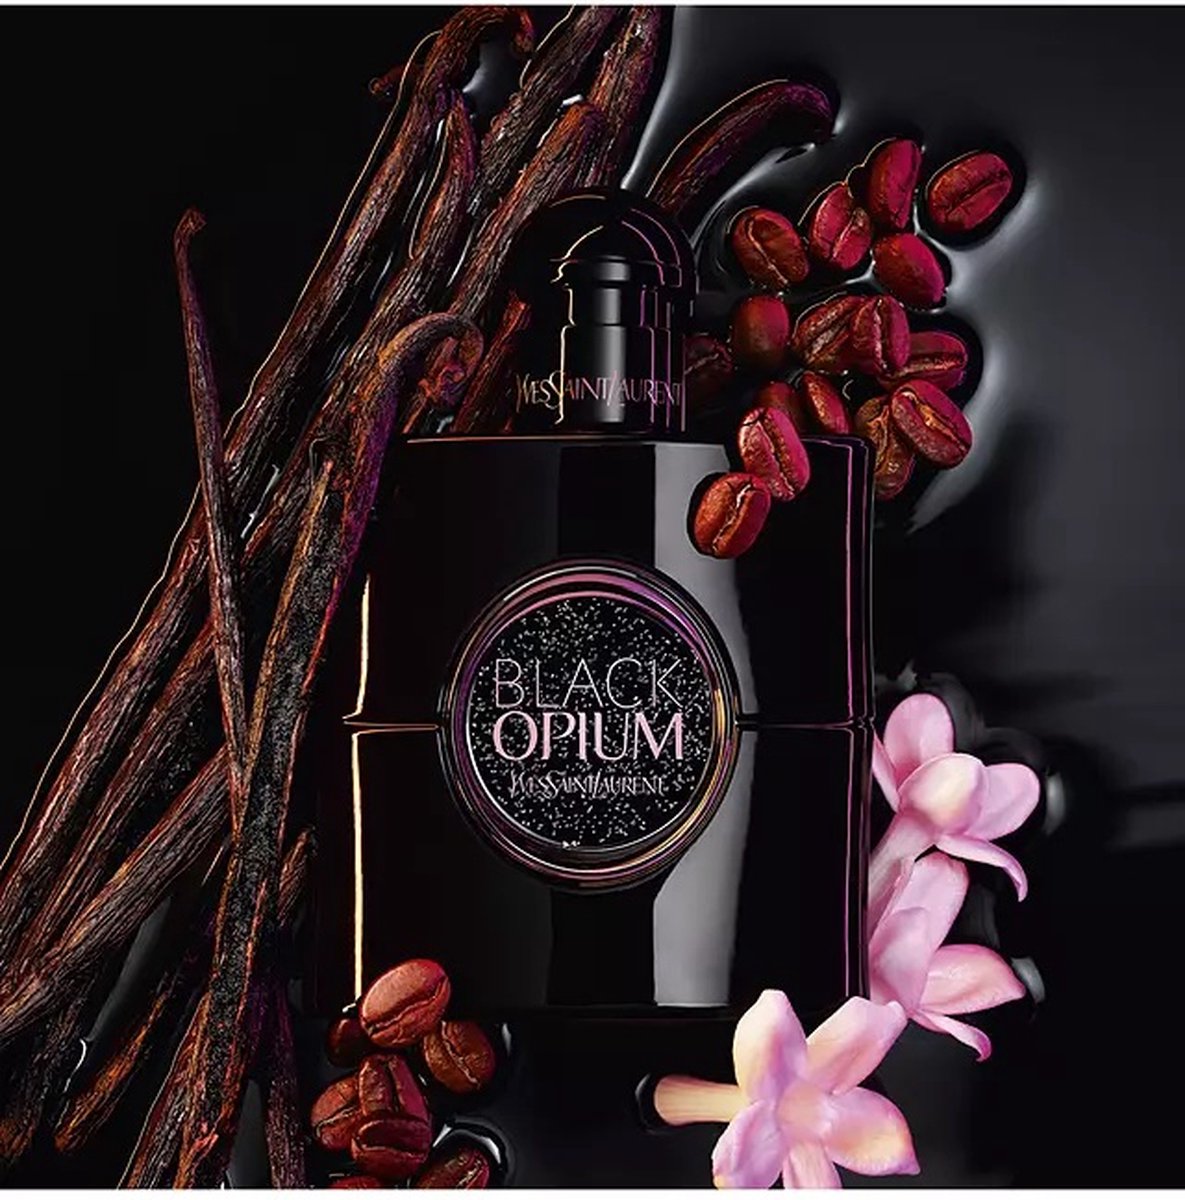 Black Opium Yves Saint Laurent 90 ml - Le parfum | bol.com